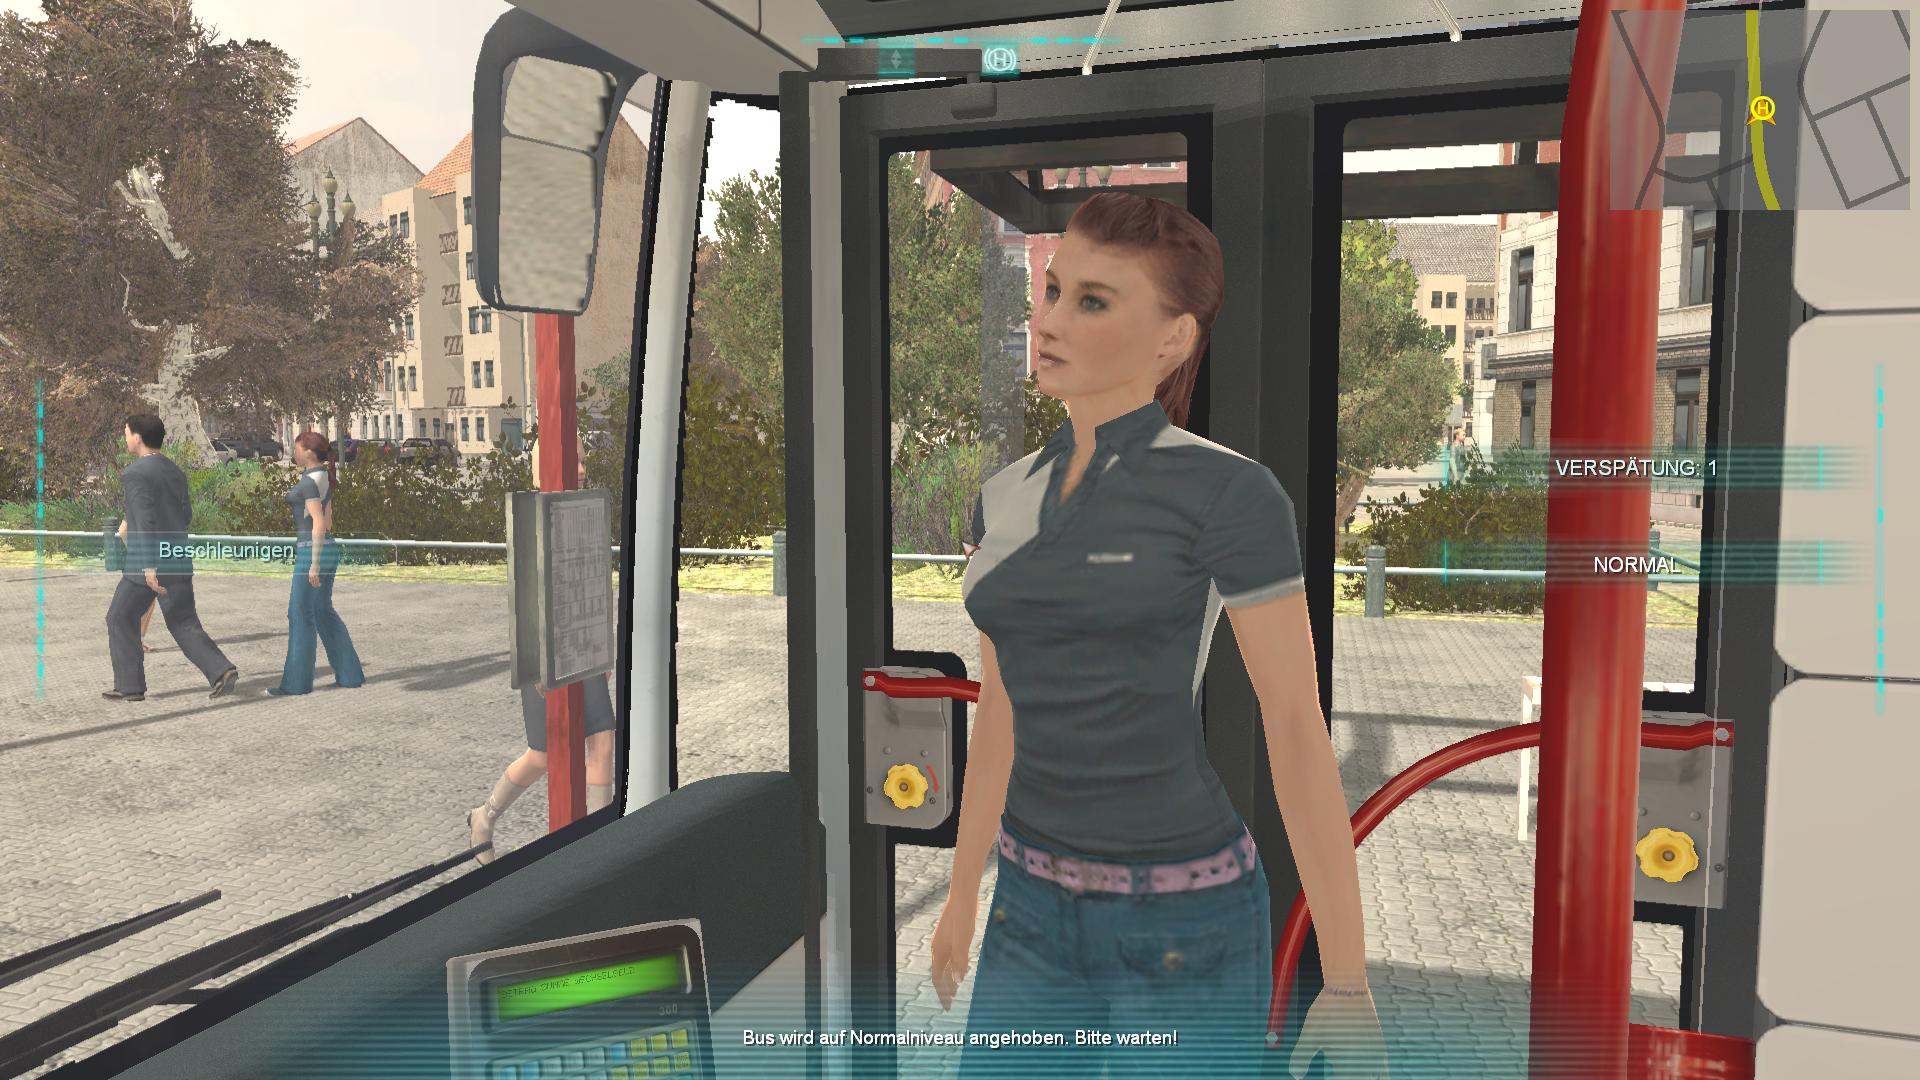 Bus-Simulator 2012 on Steam